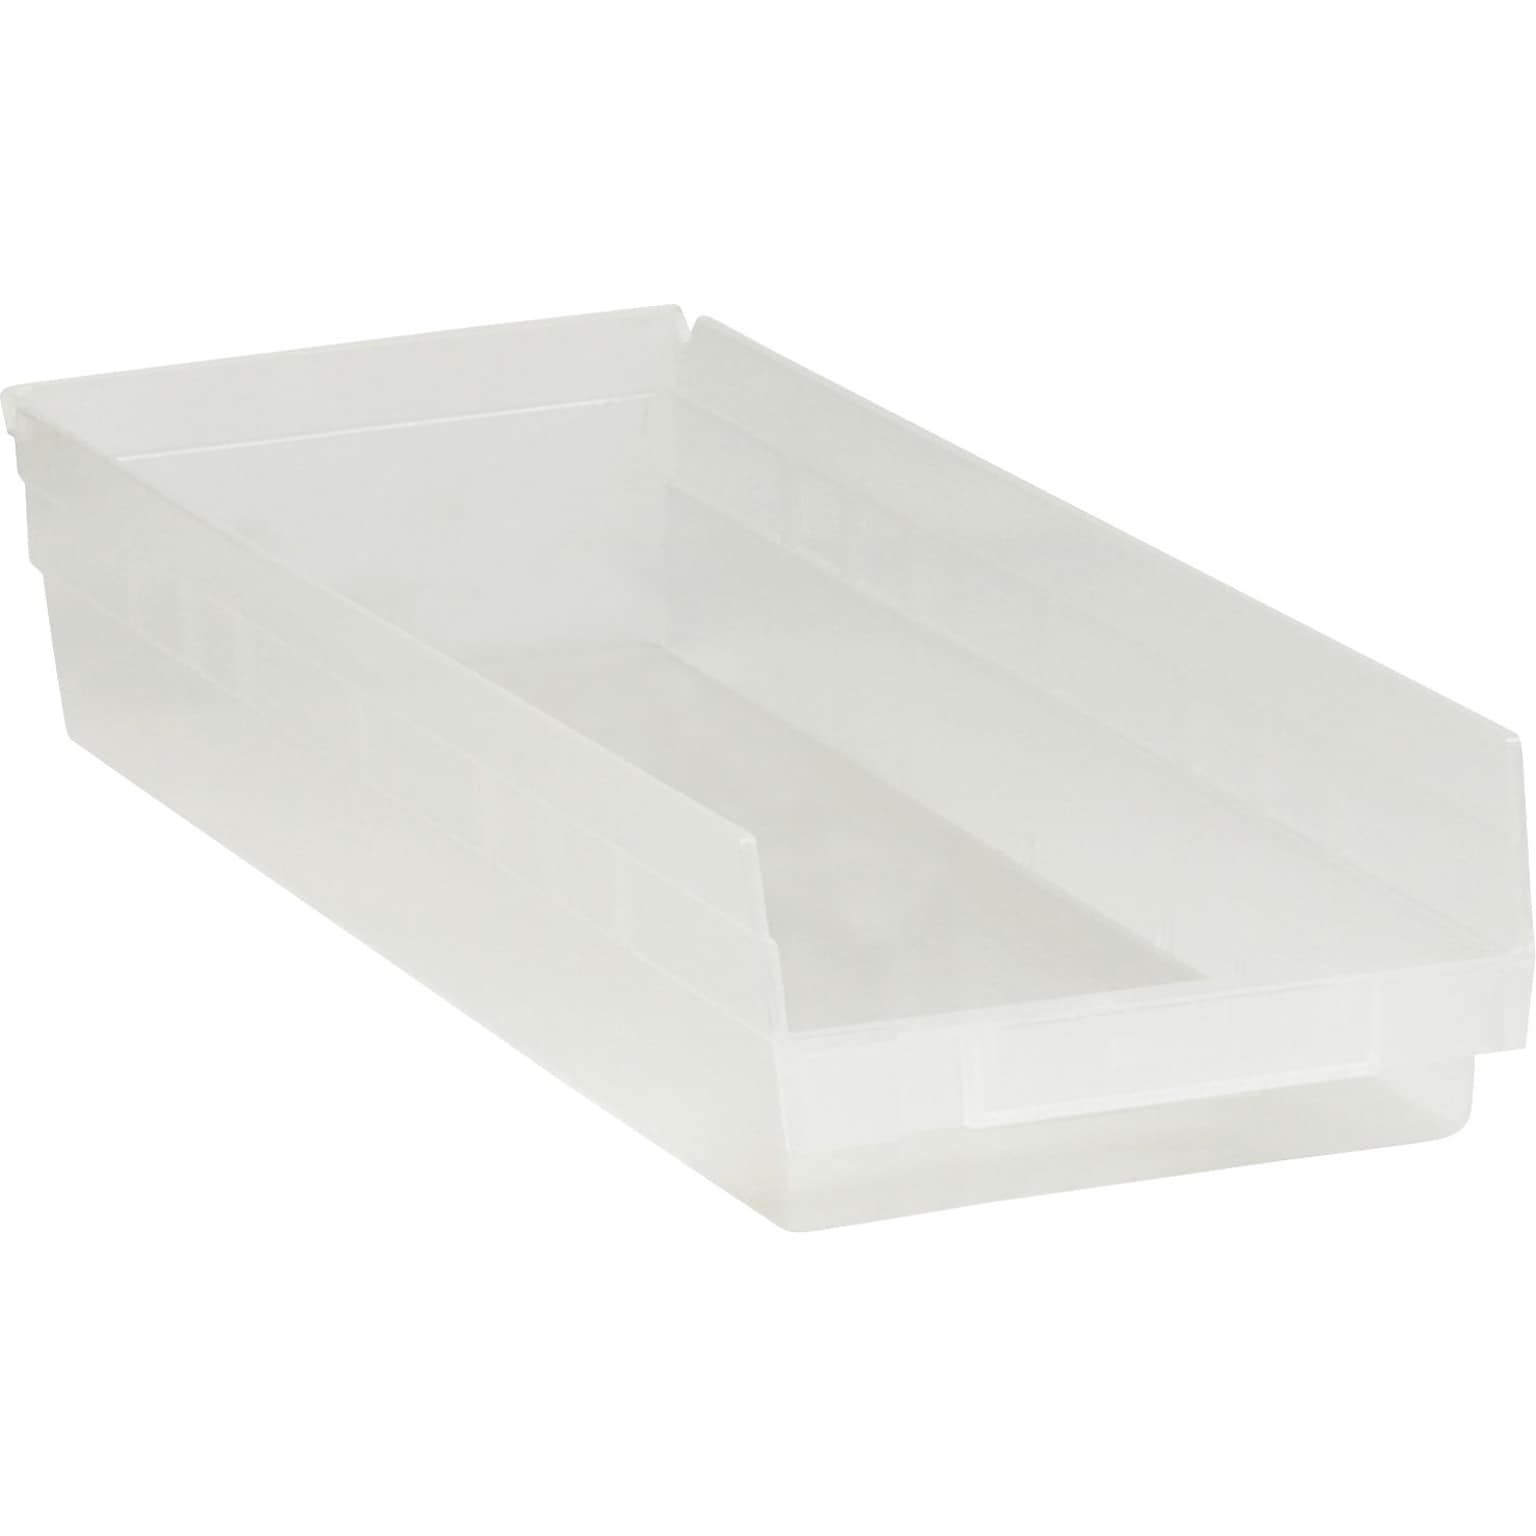 Quill Brand 23 5/8 x 8 3/8 x 4 Plastic Shelf Bin Box, Clear, 6/Case (BINPS123CL)